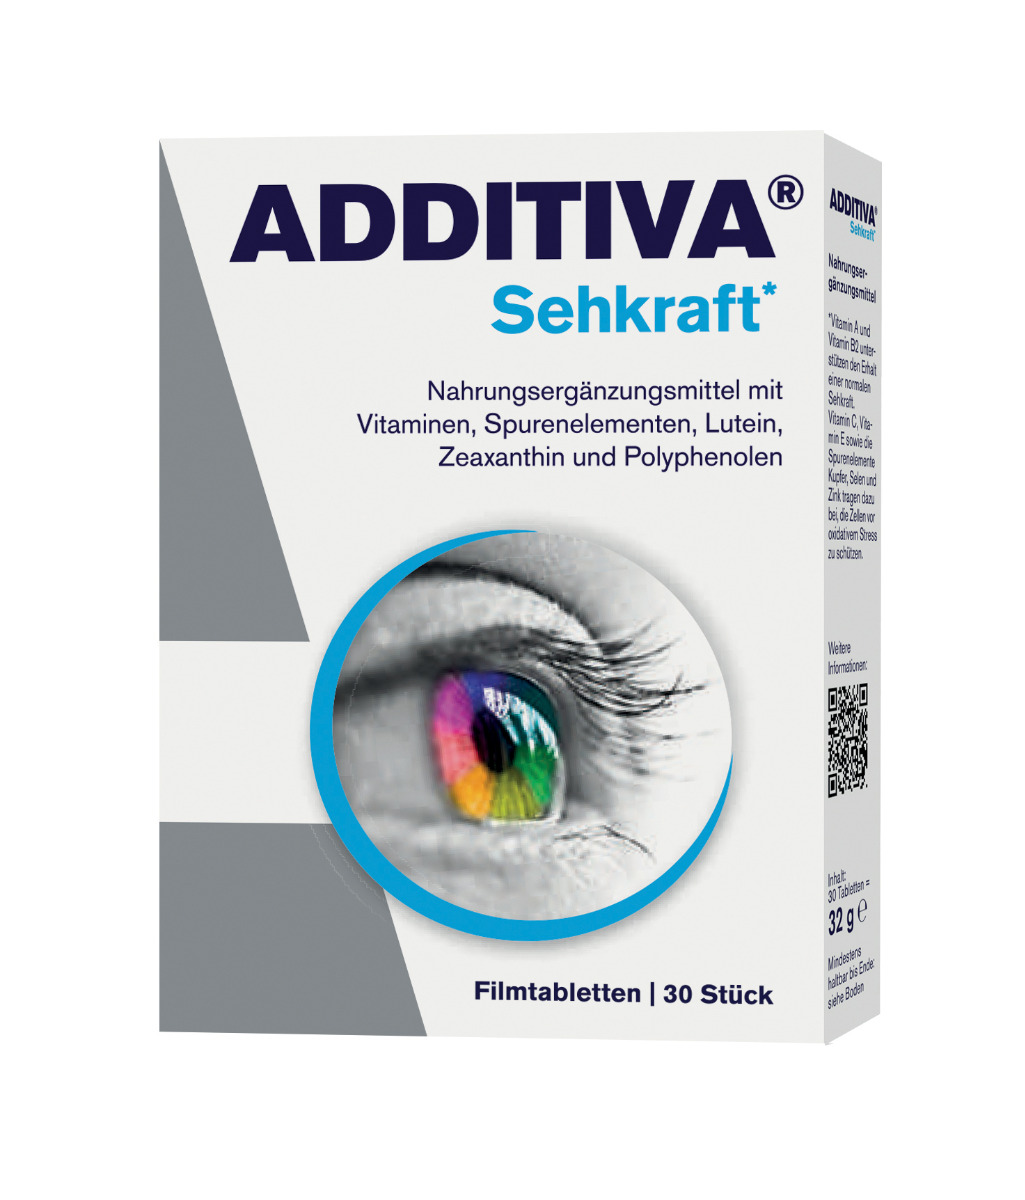 Additiva Ostrý zrak 30 tablet Additiva